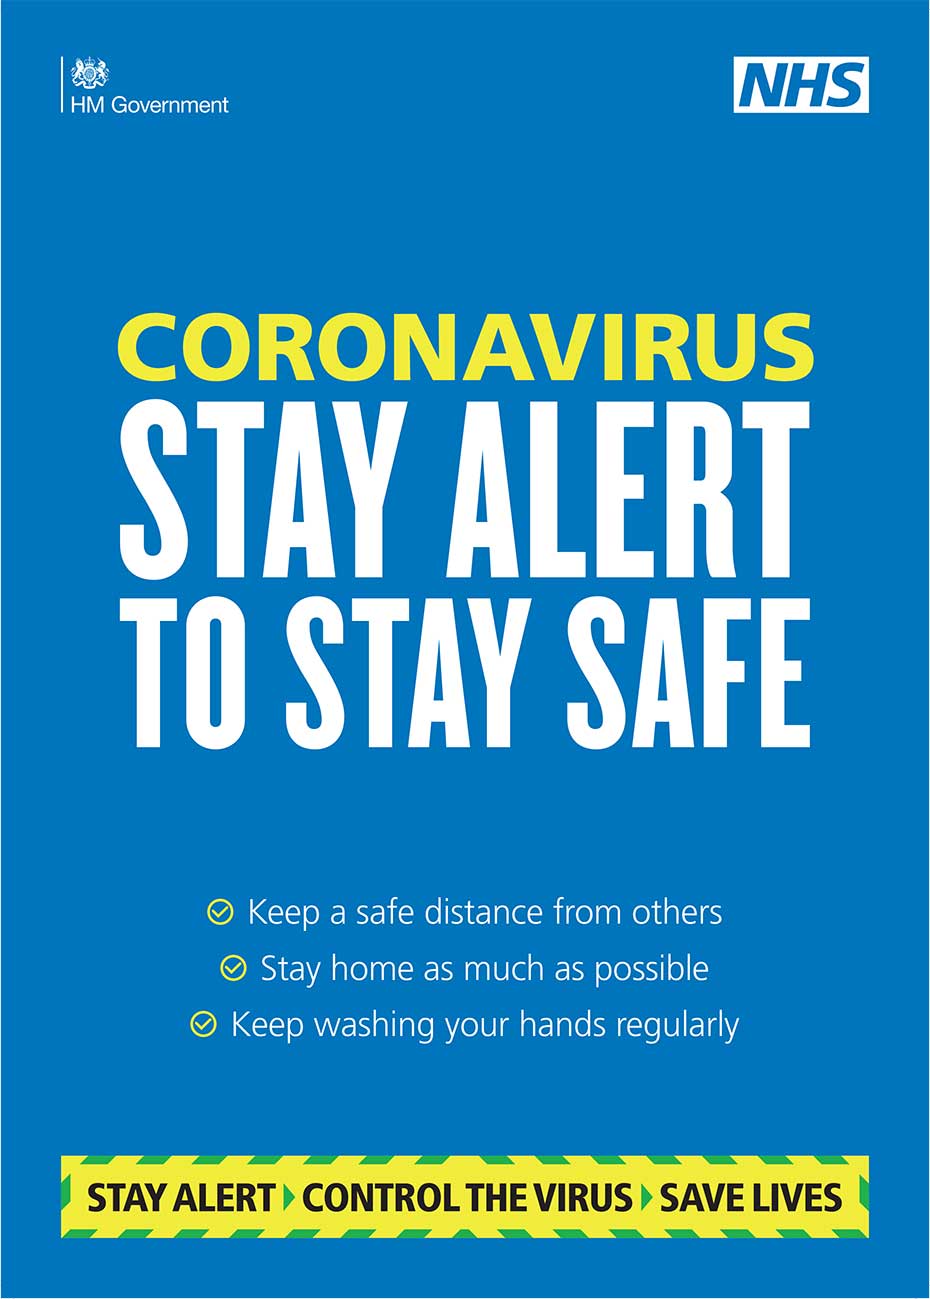 Communications Coronavirus (COVID19) information and advice